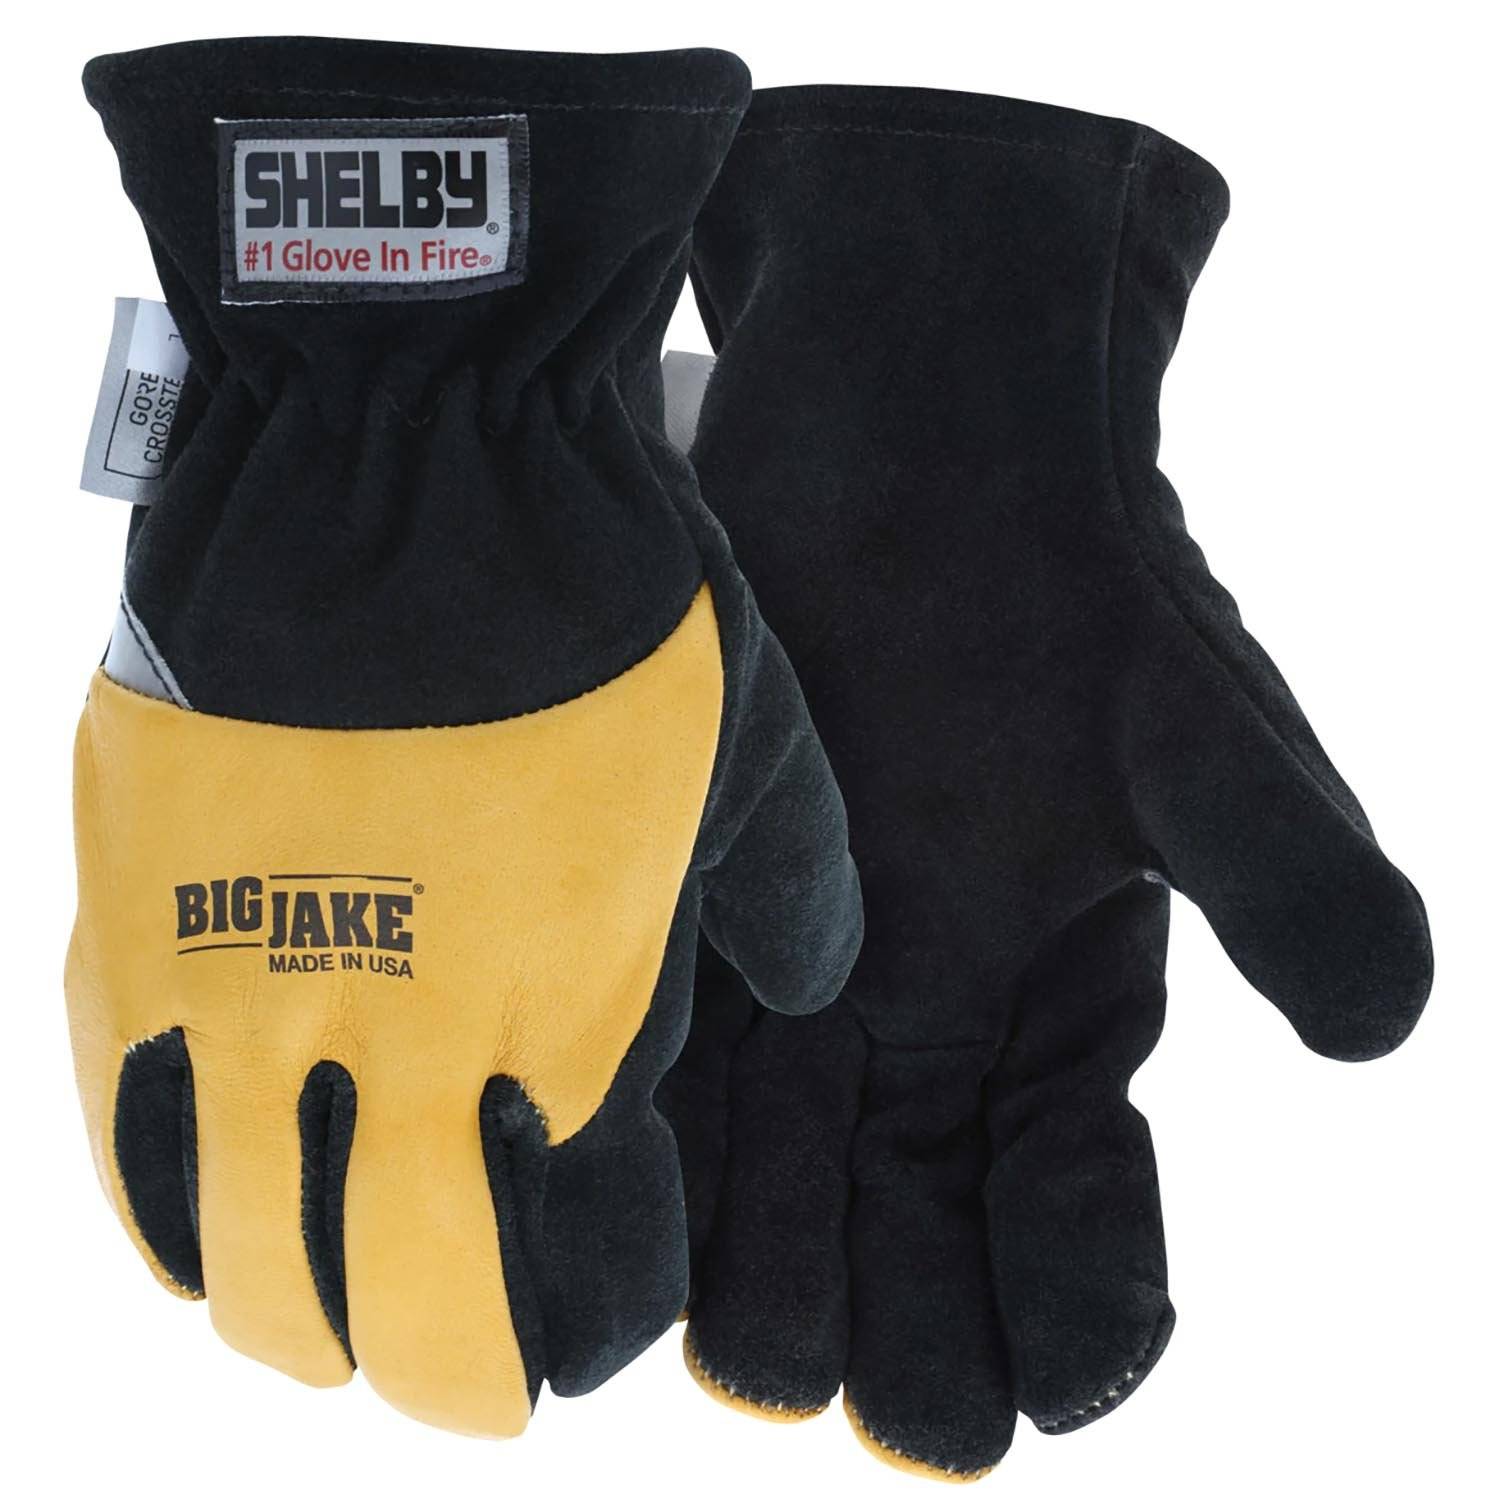 Shelby Big Jake Fire Gauntlet Gloves